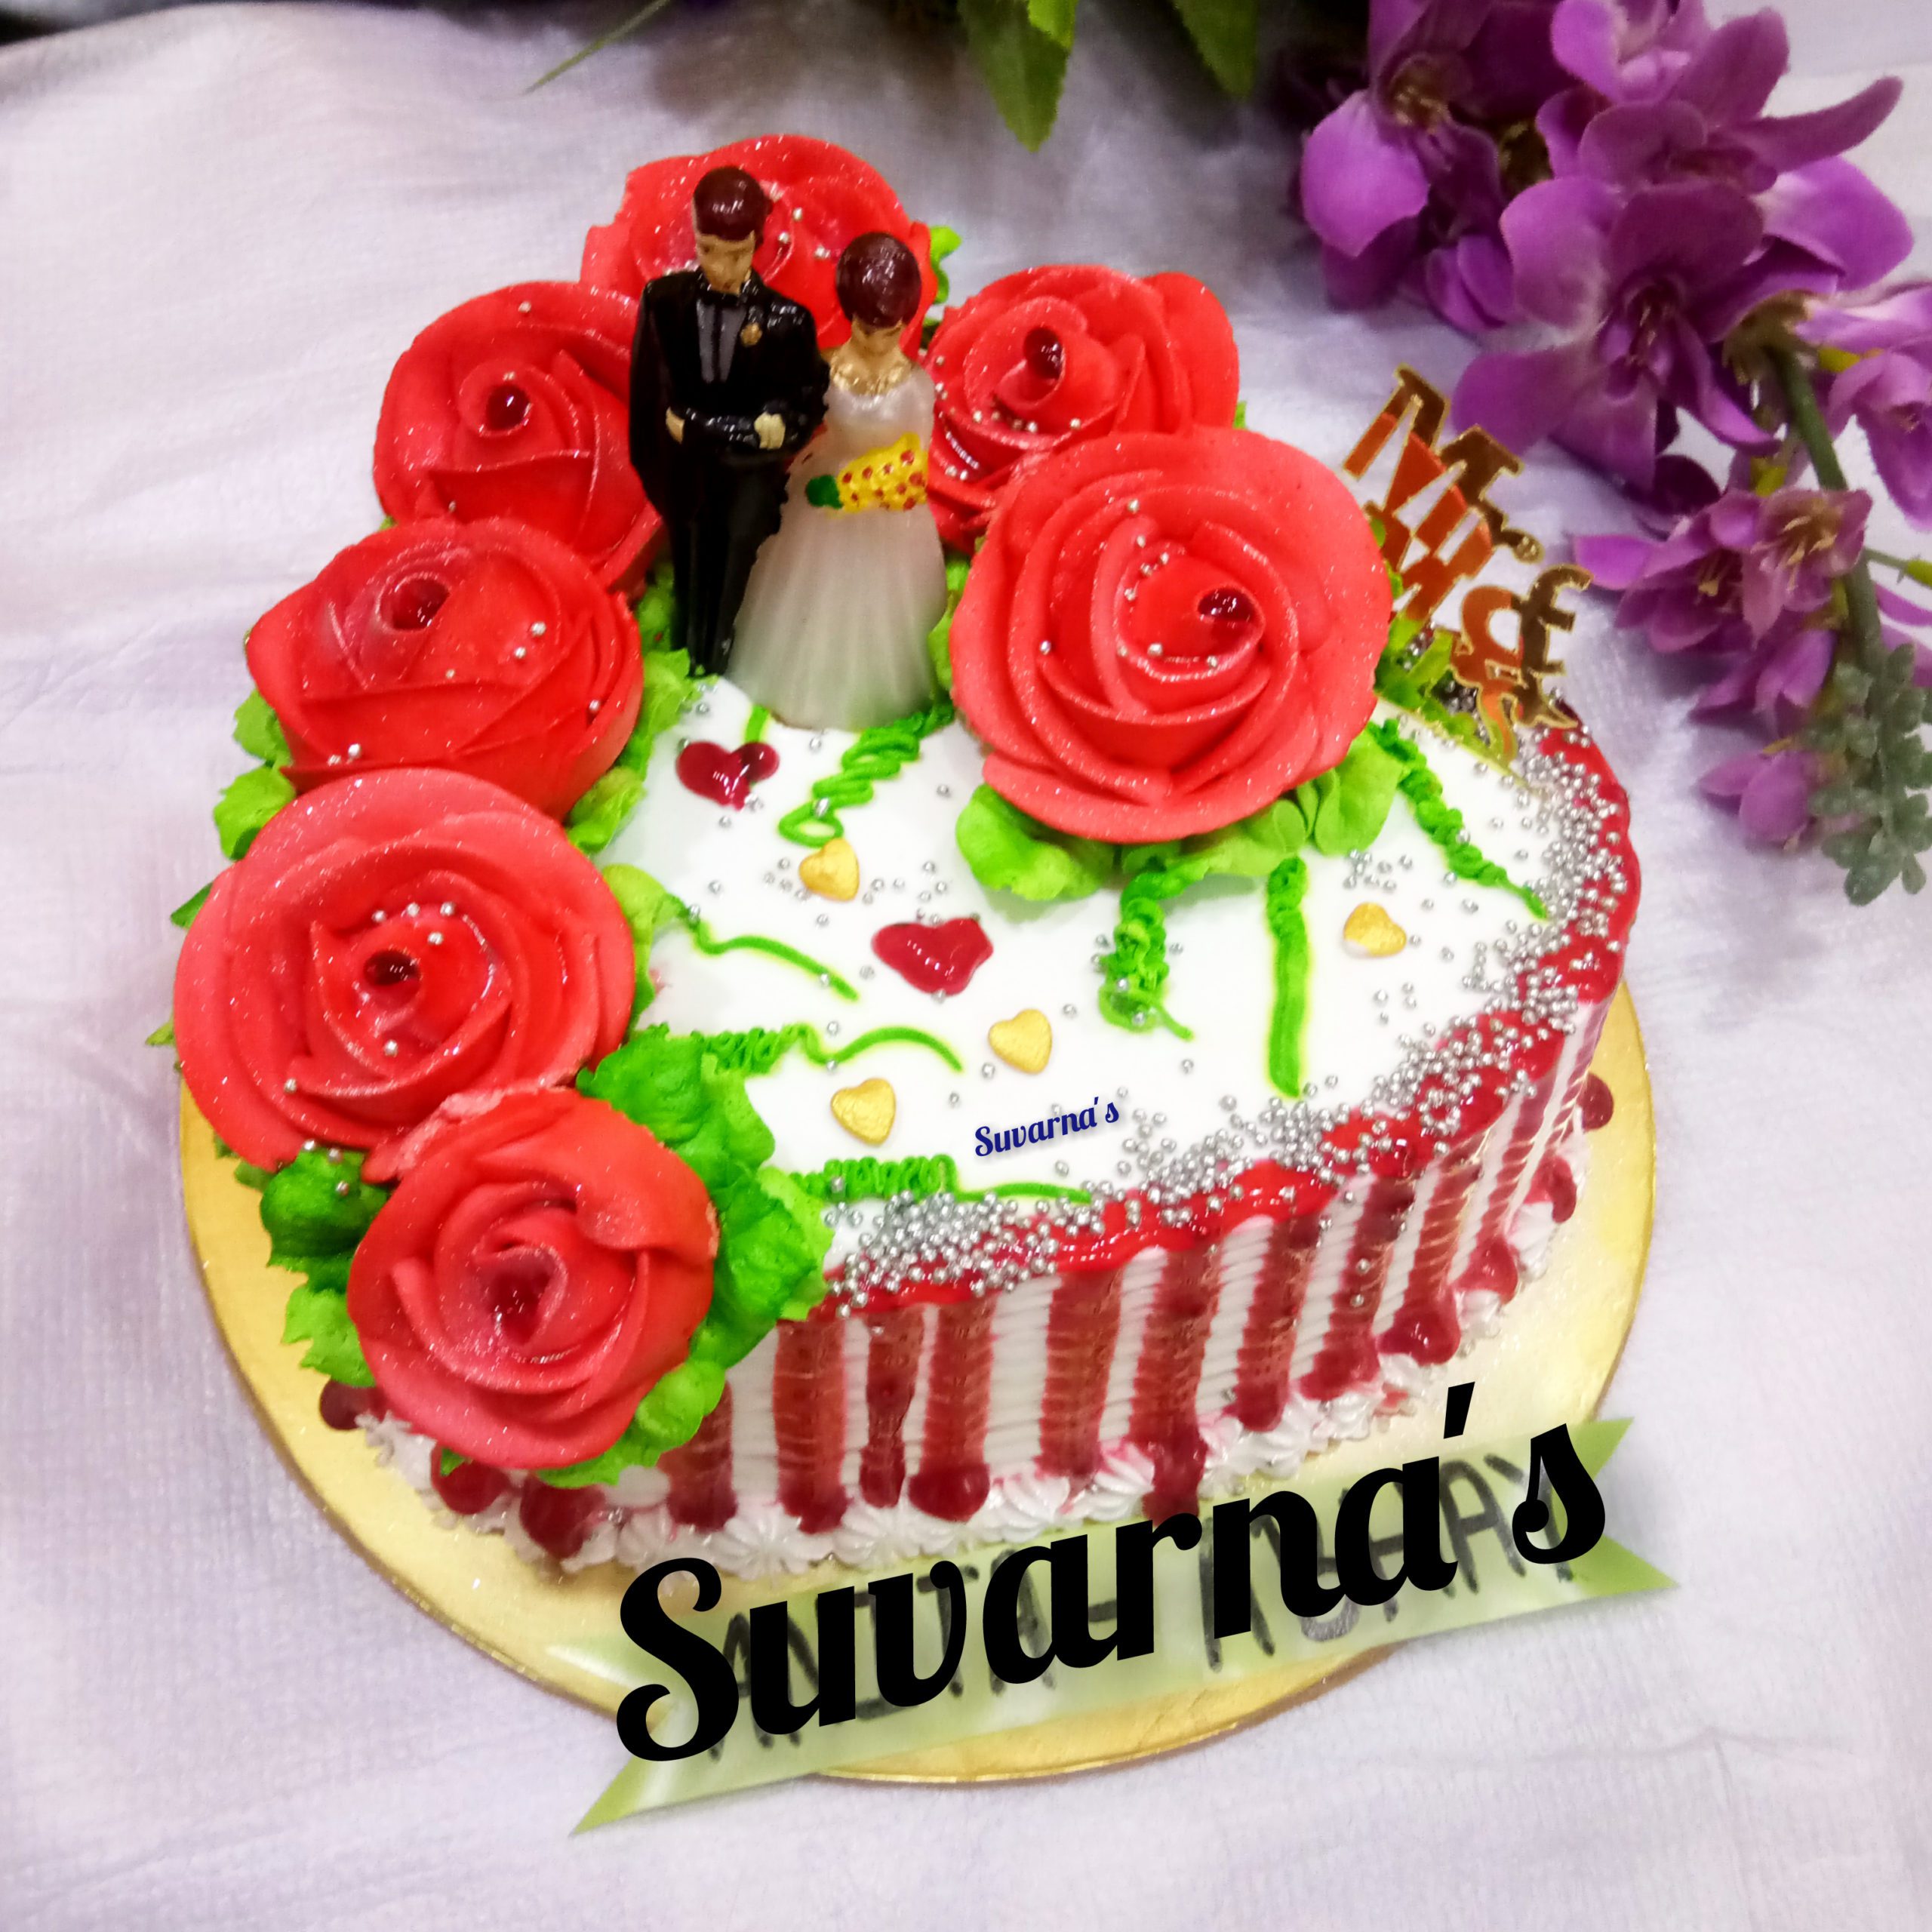 Wedding Anniversary Cake Designs, Images, Price Near Me